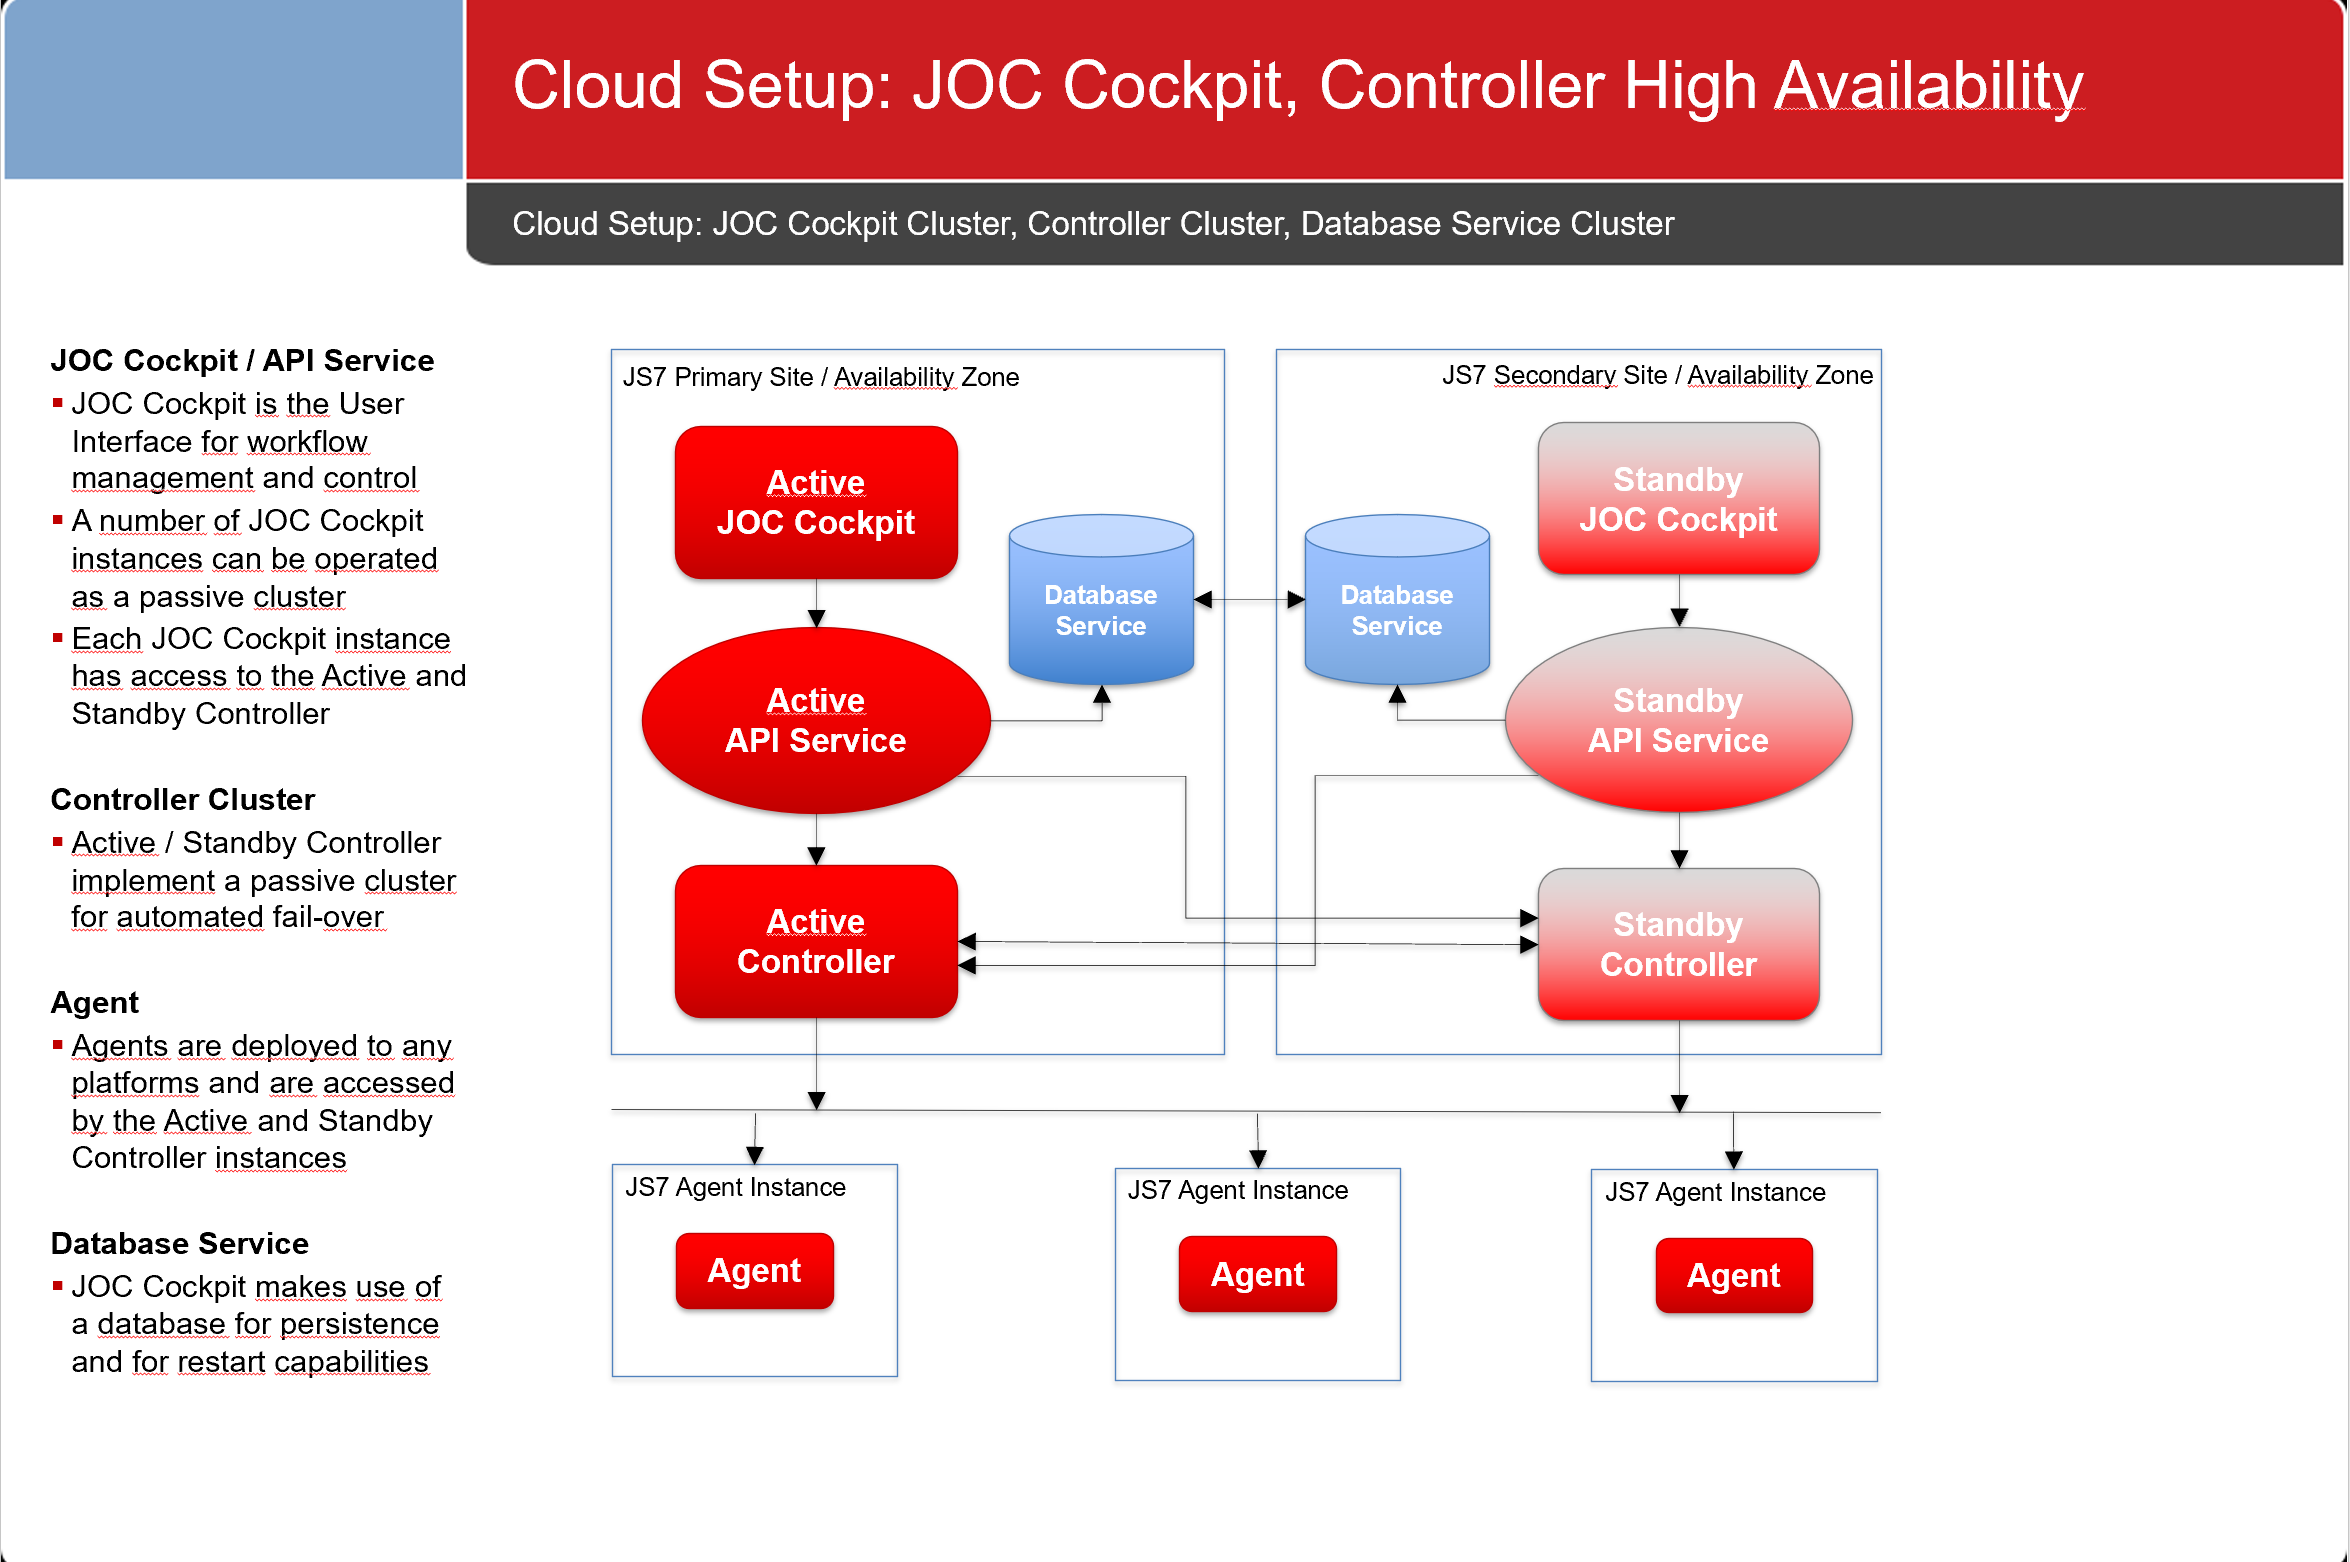 Cloud Setup for JOC Cockpit and Controller Availability